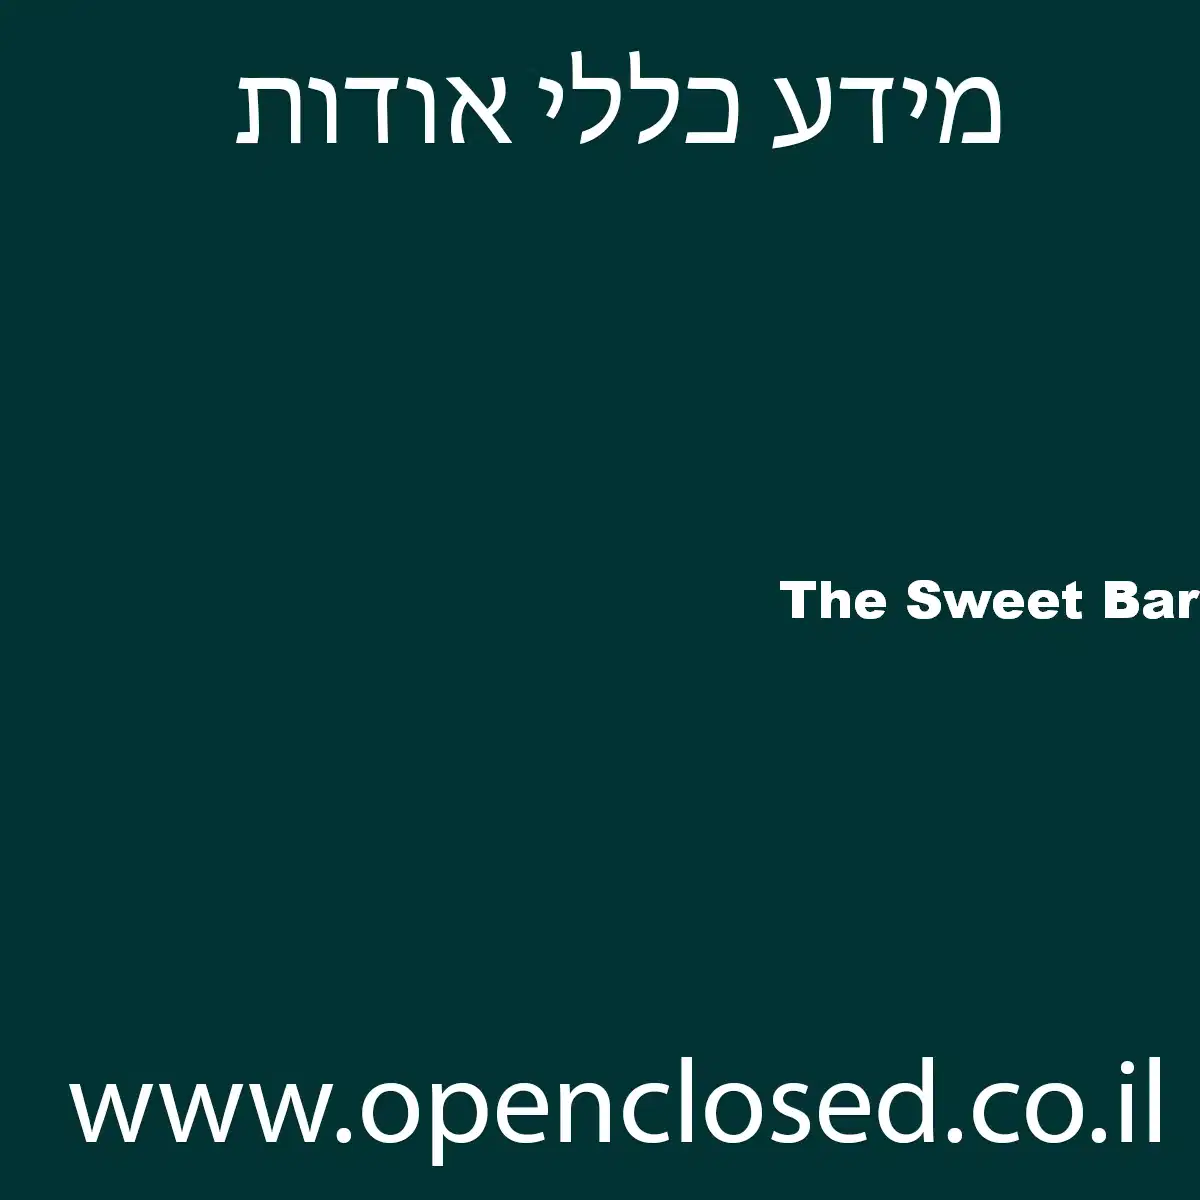 The Sweet Bar